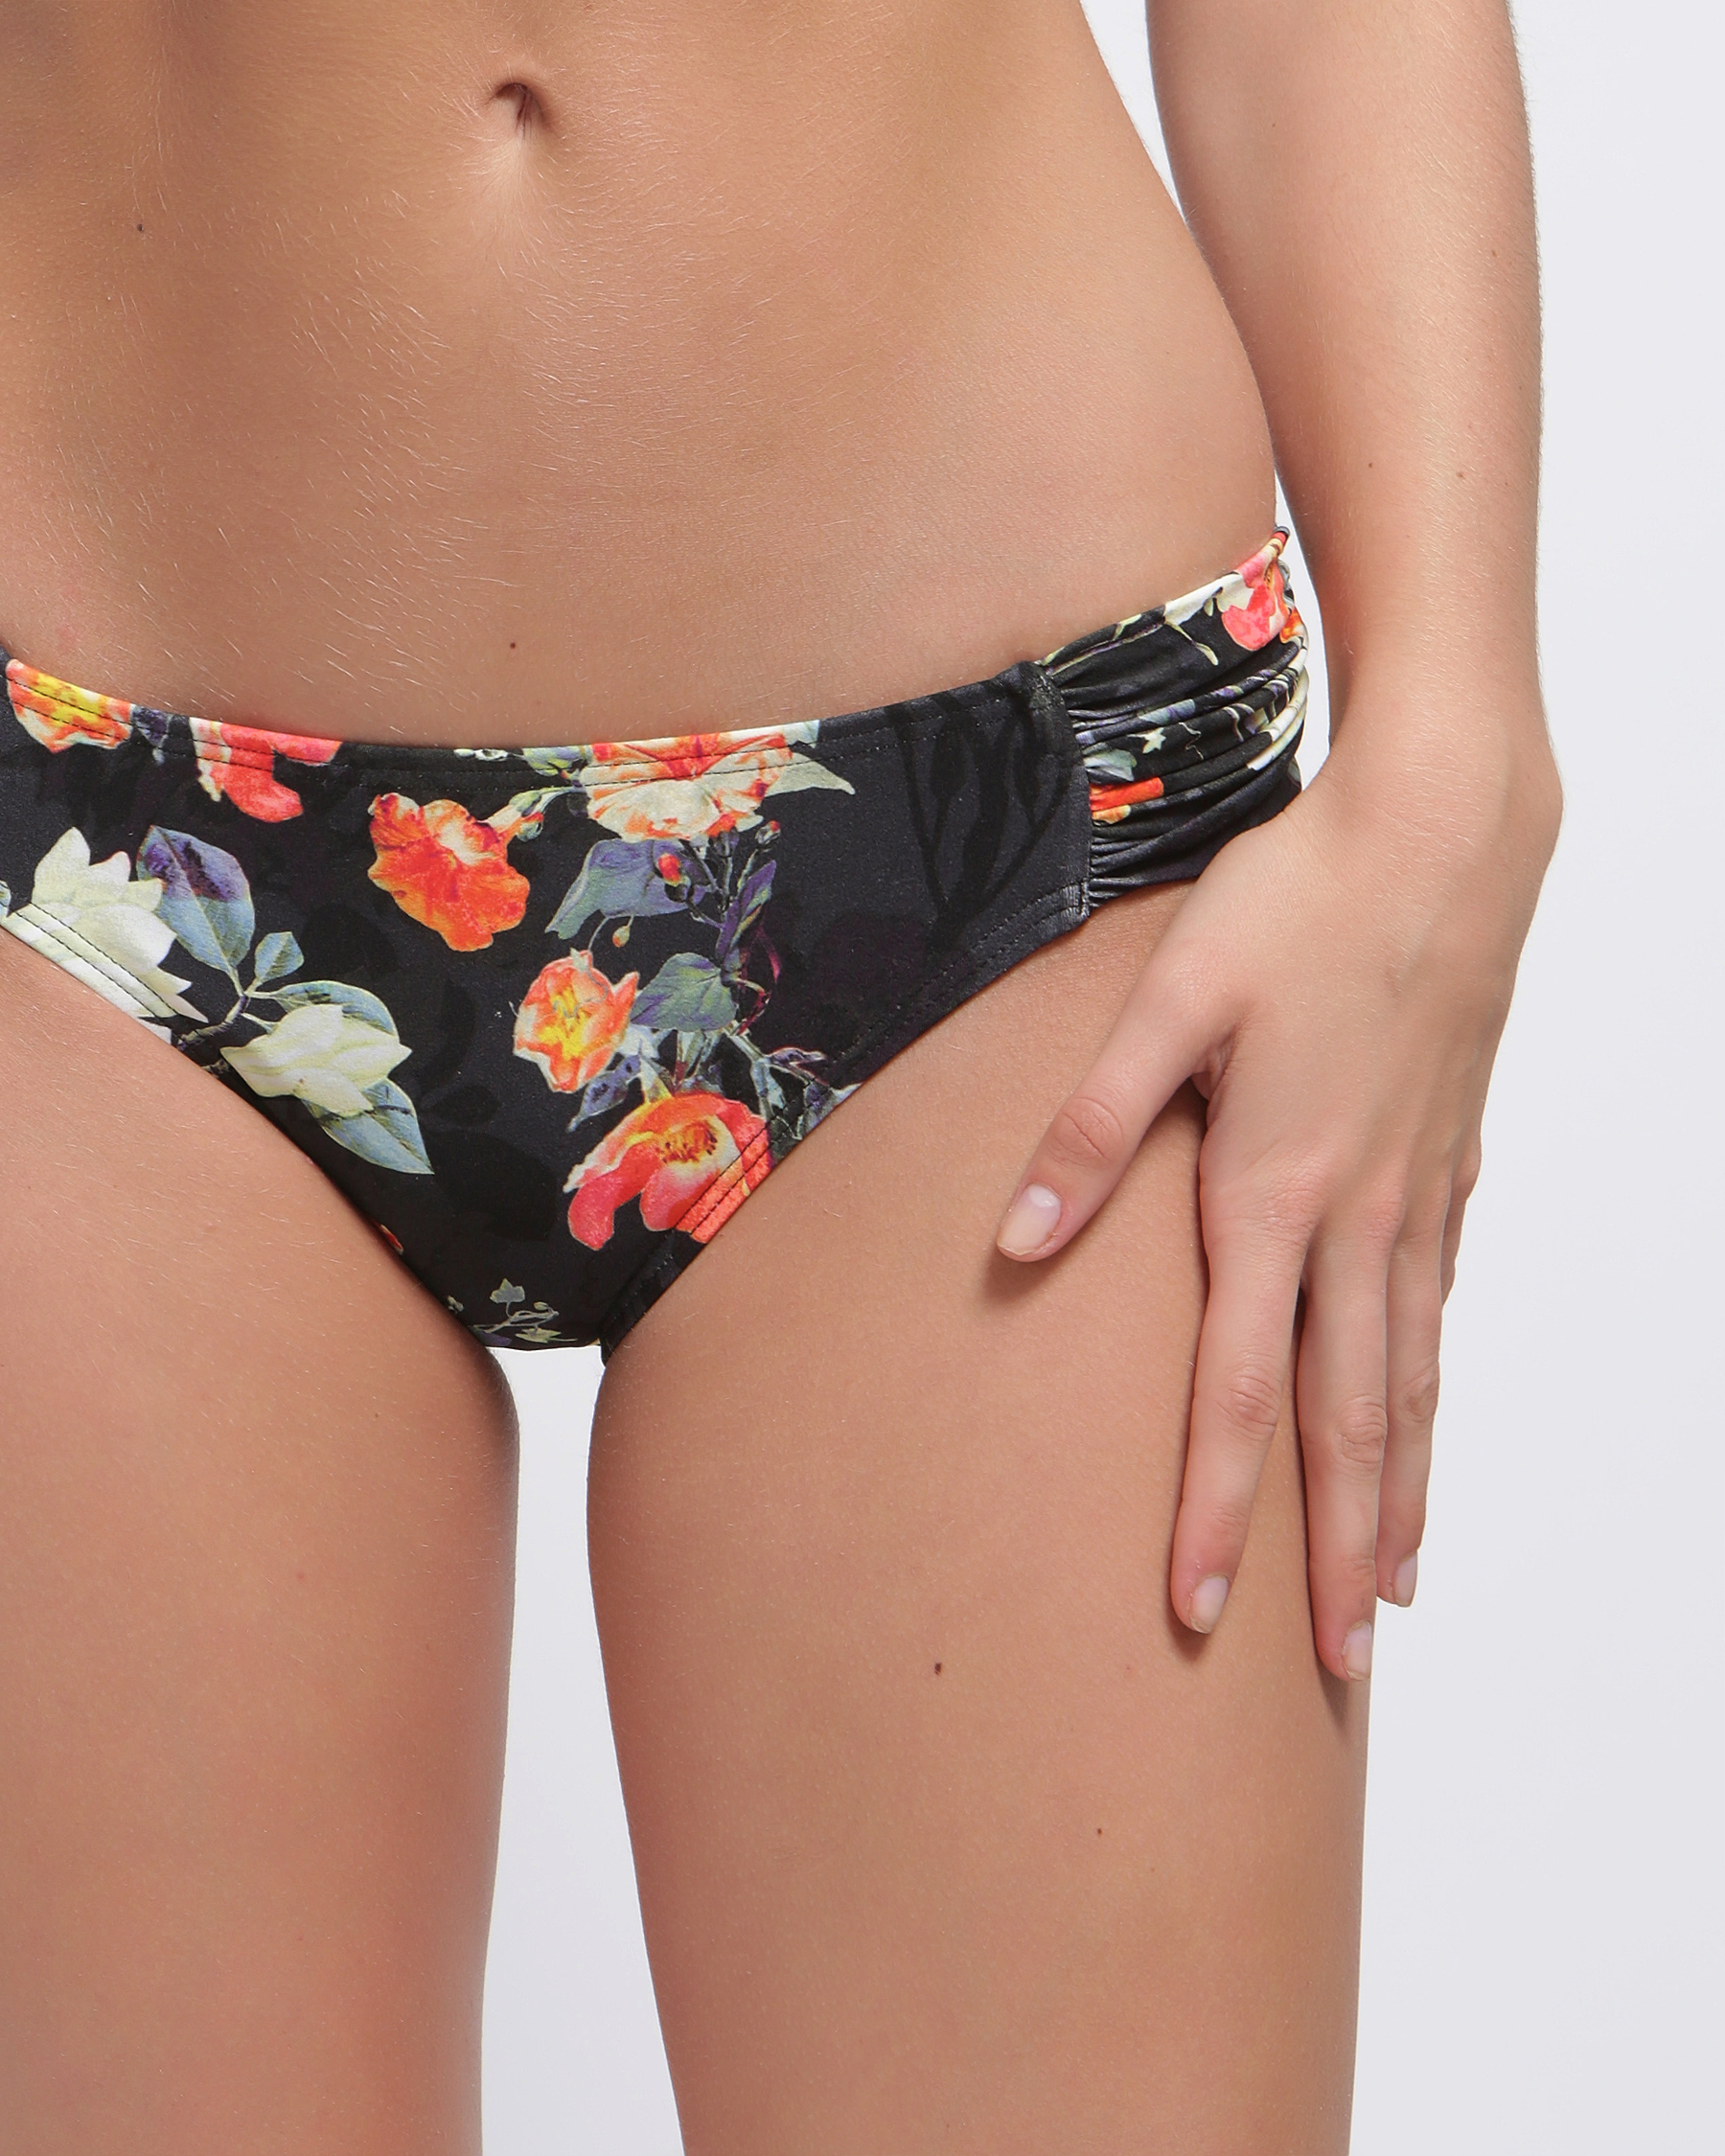 AZURA DOLCE Gathered Sides Bikini Bottom Dark floral SS30788 - View1